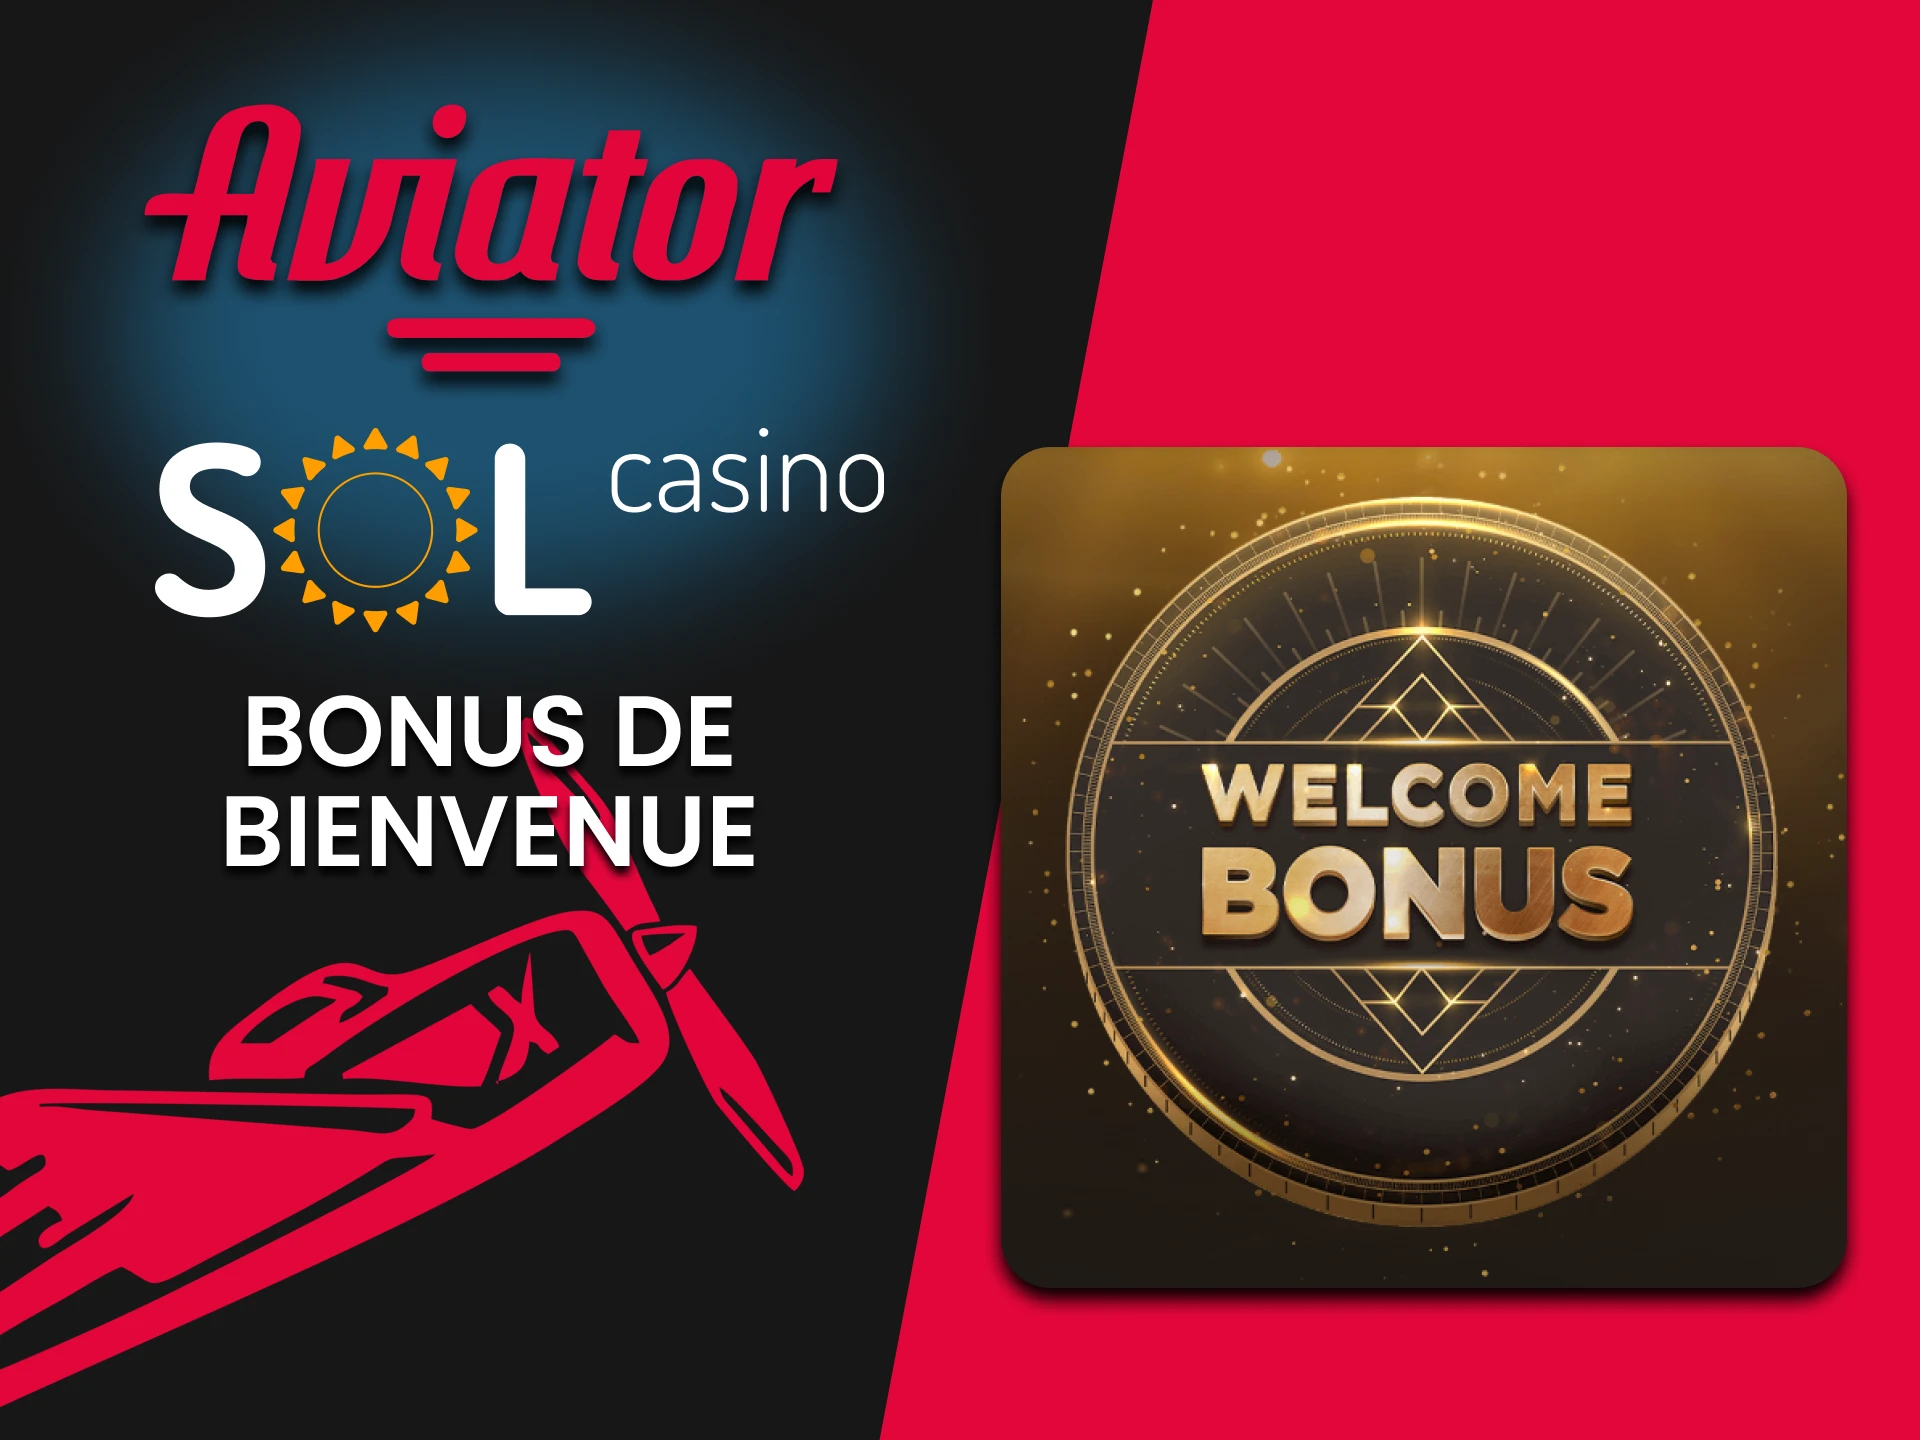 Sol Casino offre un bonus de bienvenue à l'Aviator.